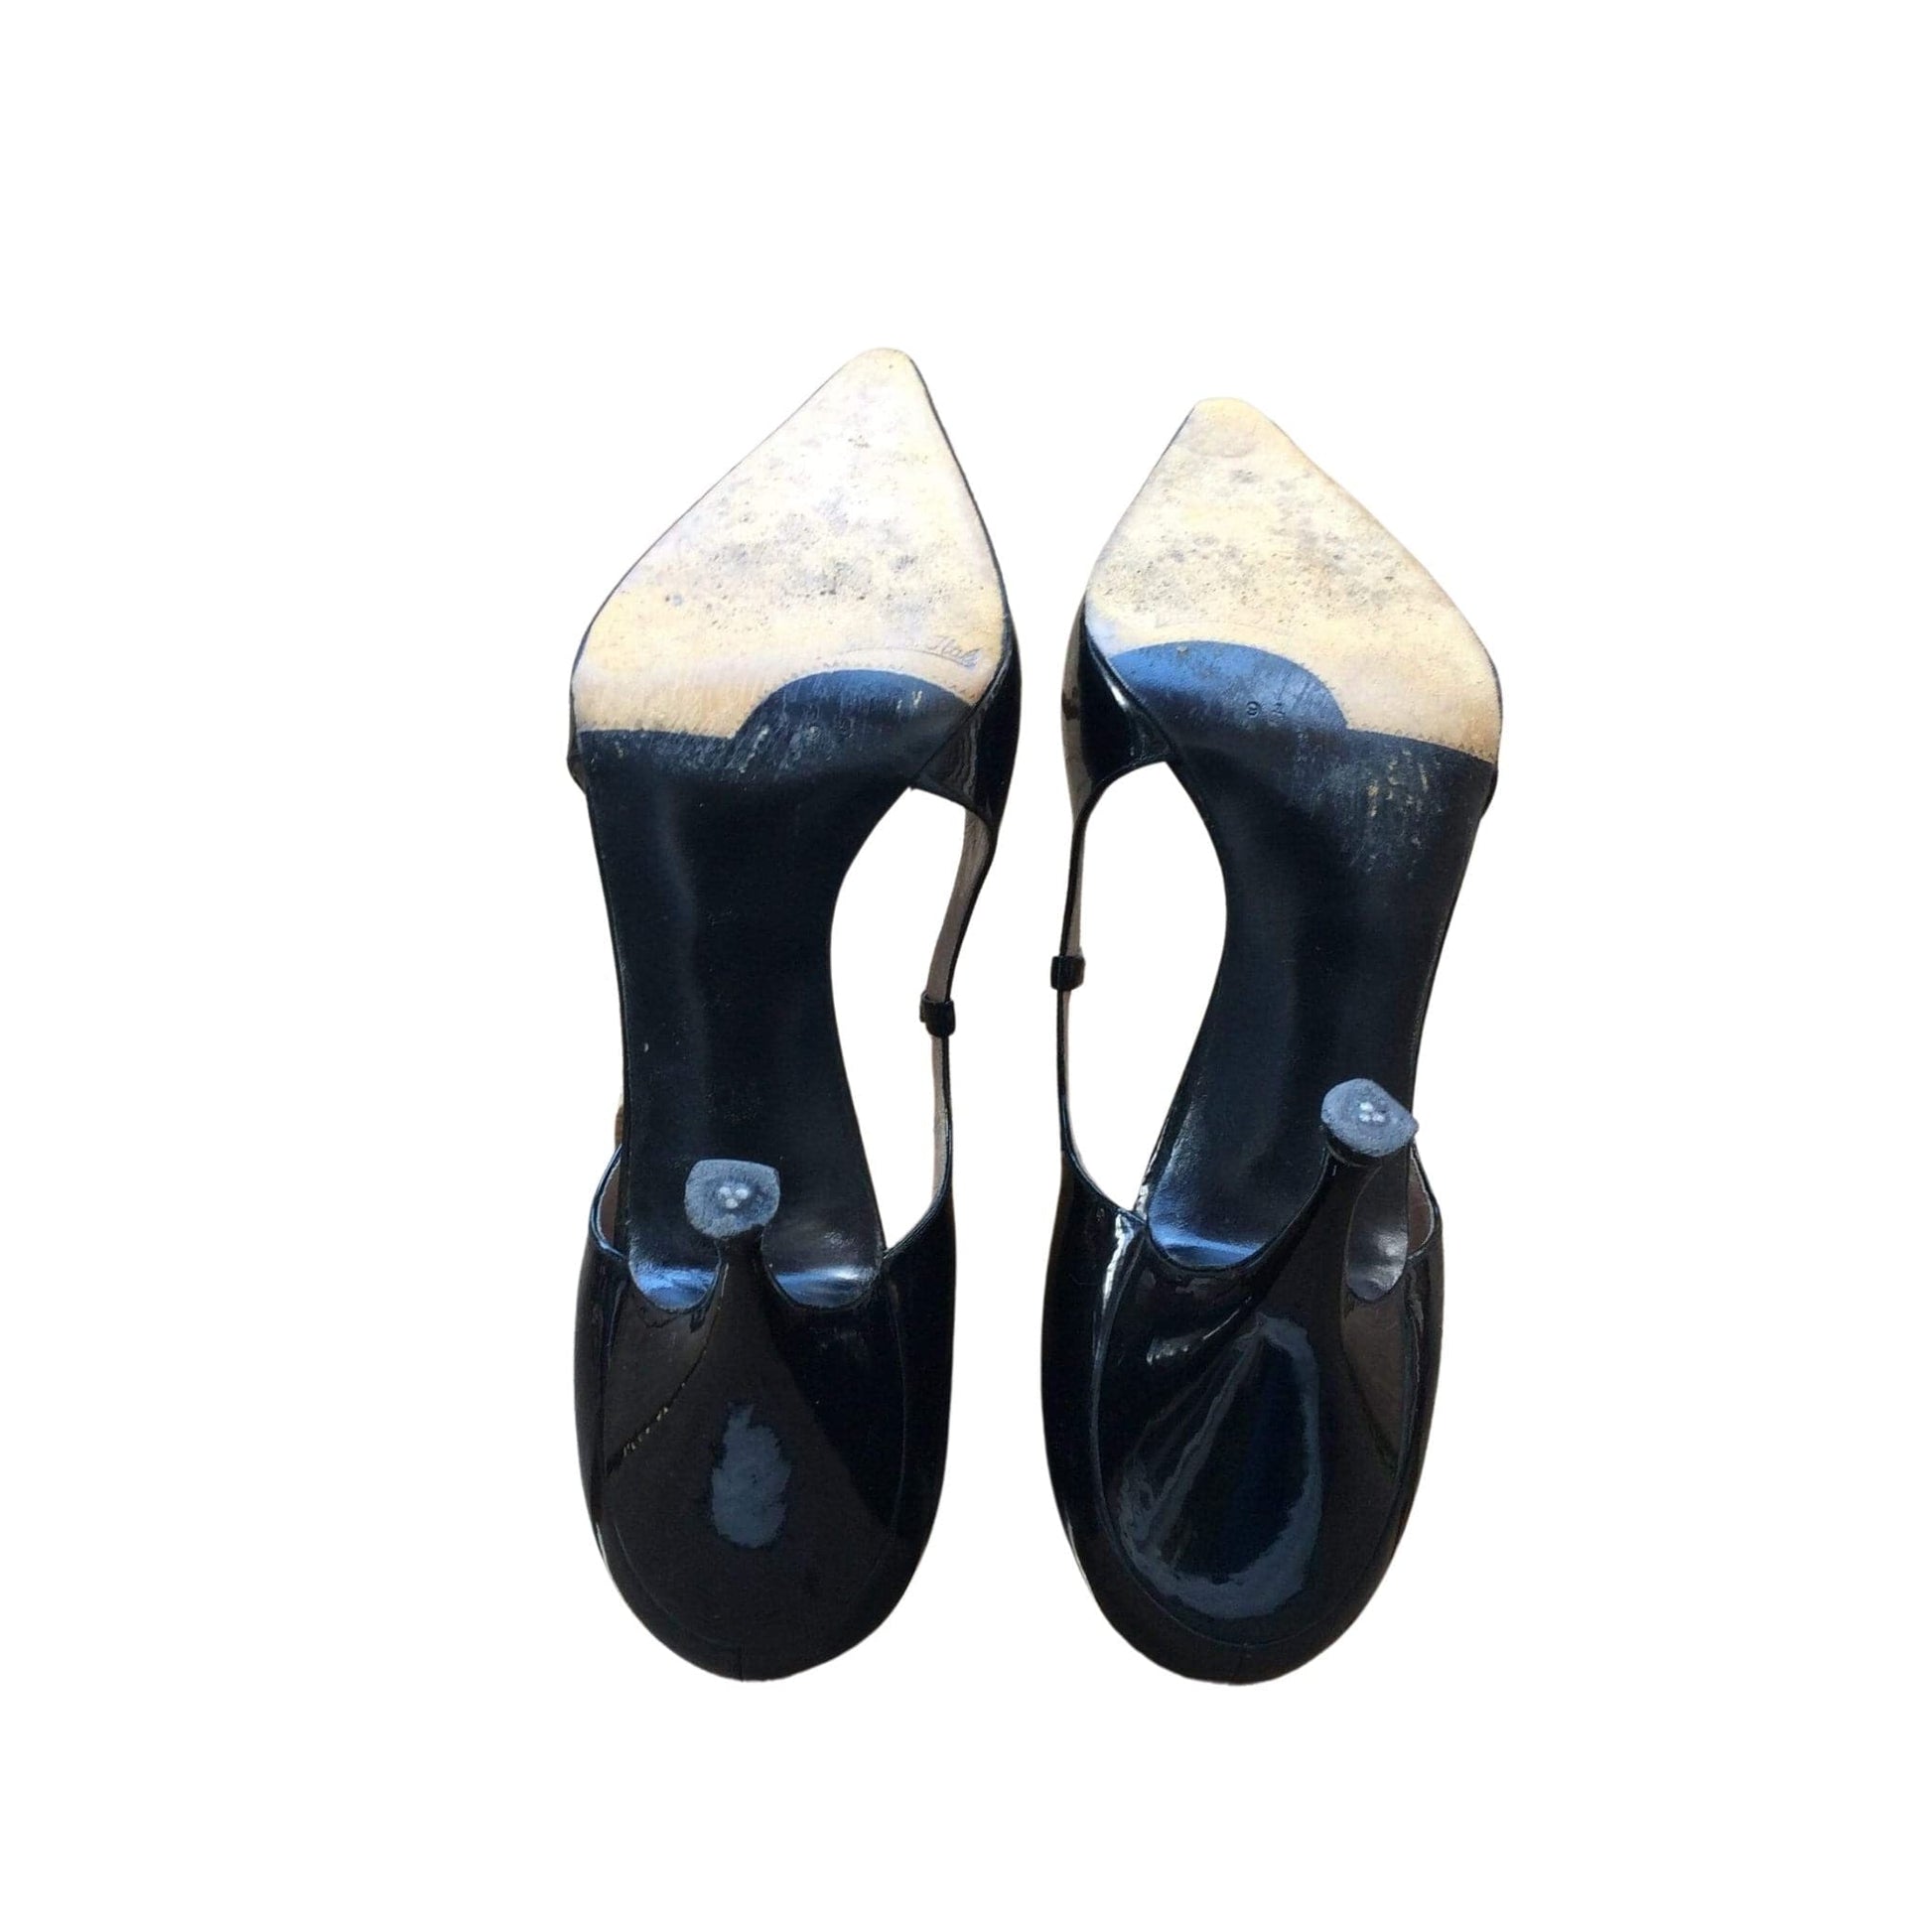 Mary Jane Stiletto Heels 9 / Black / Vintage 1990s